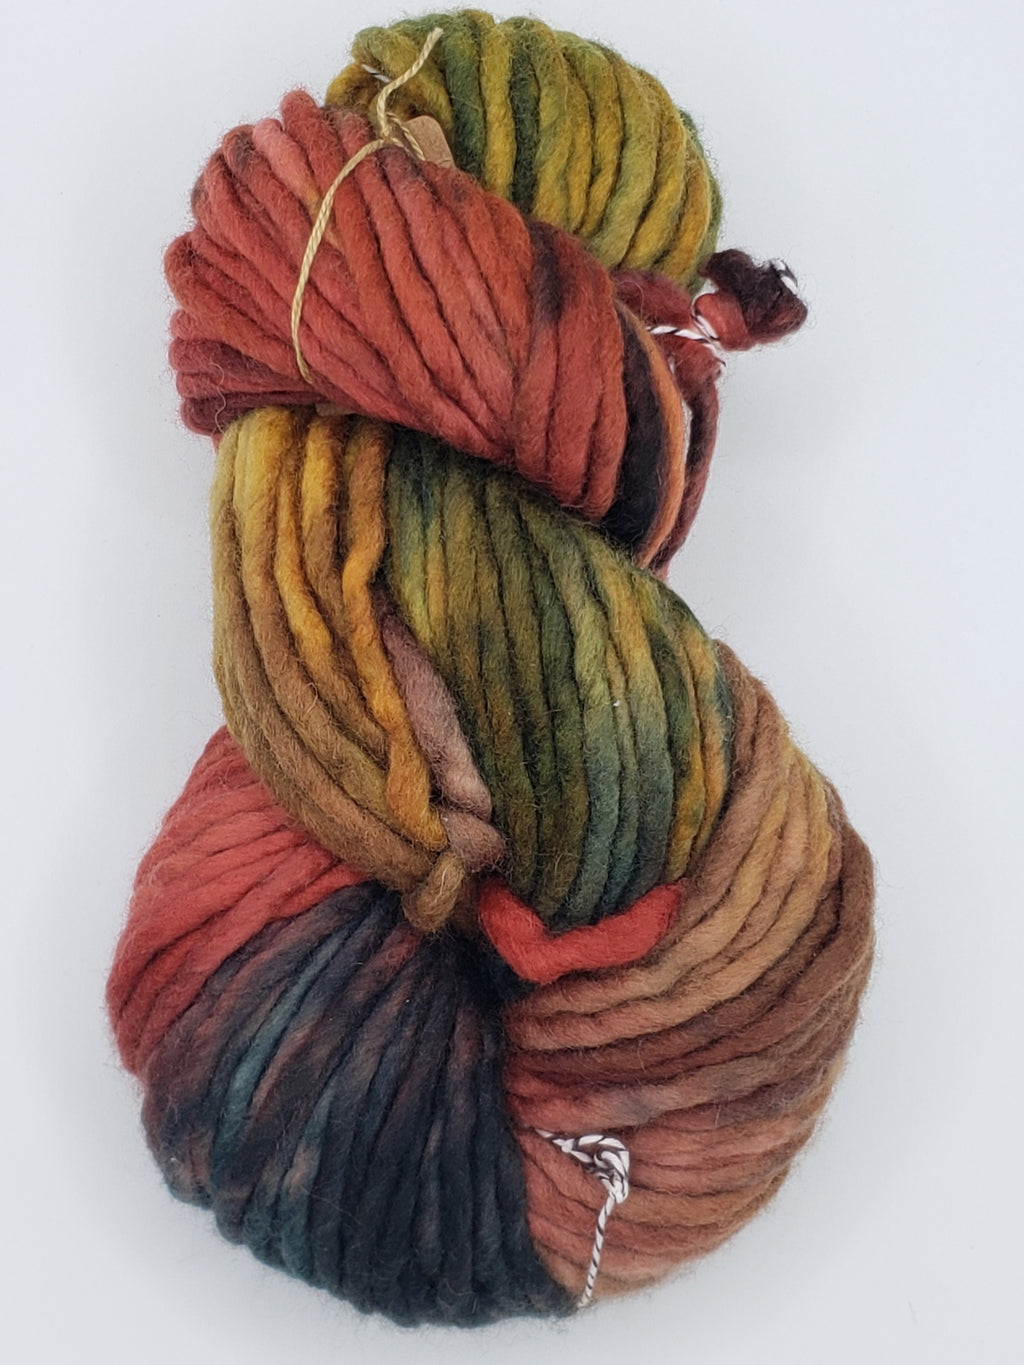 Flouf - APPLE ORCHARD - 100% Merino Chunky - OOAK Fleece Artist Hand Dyed Yarn